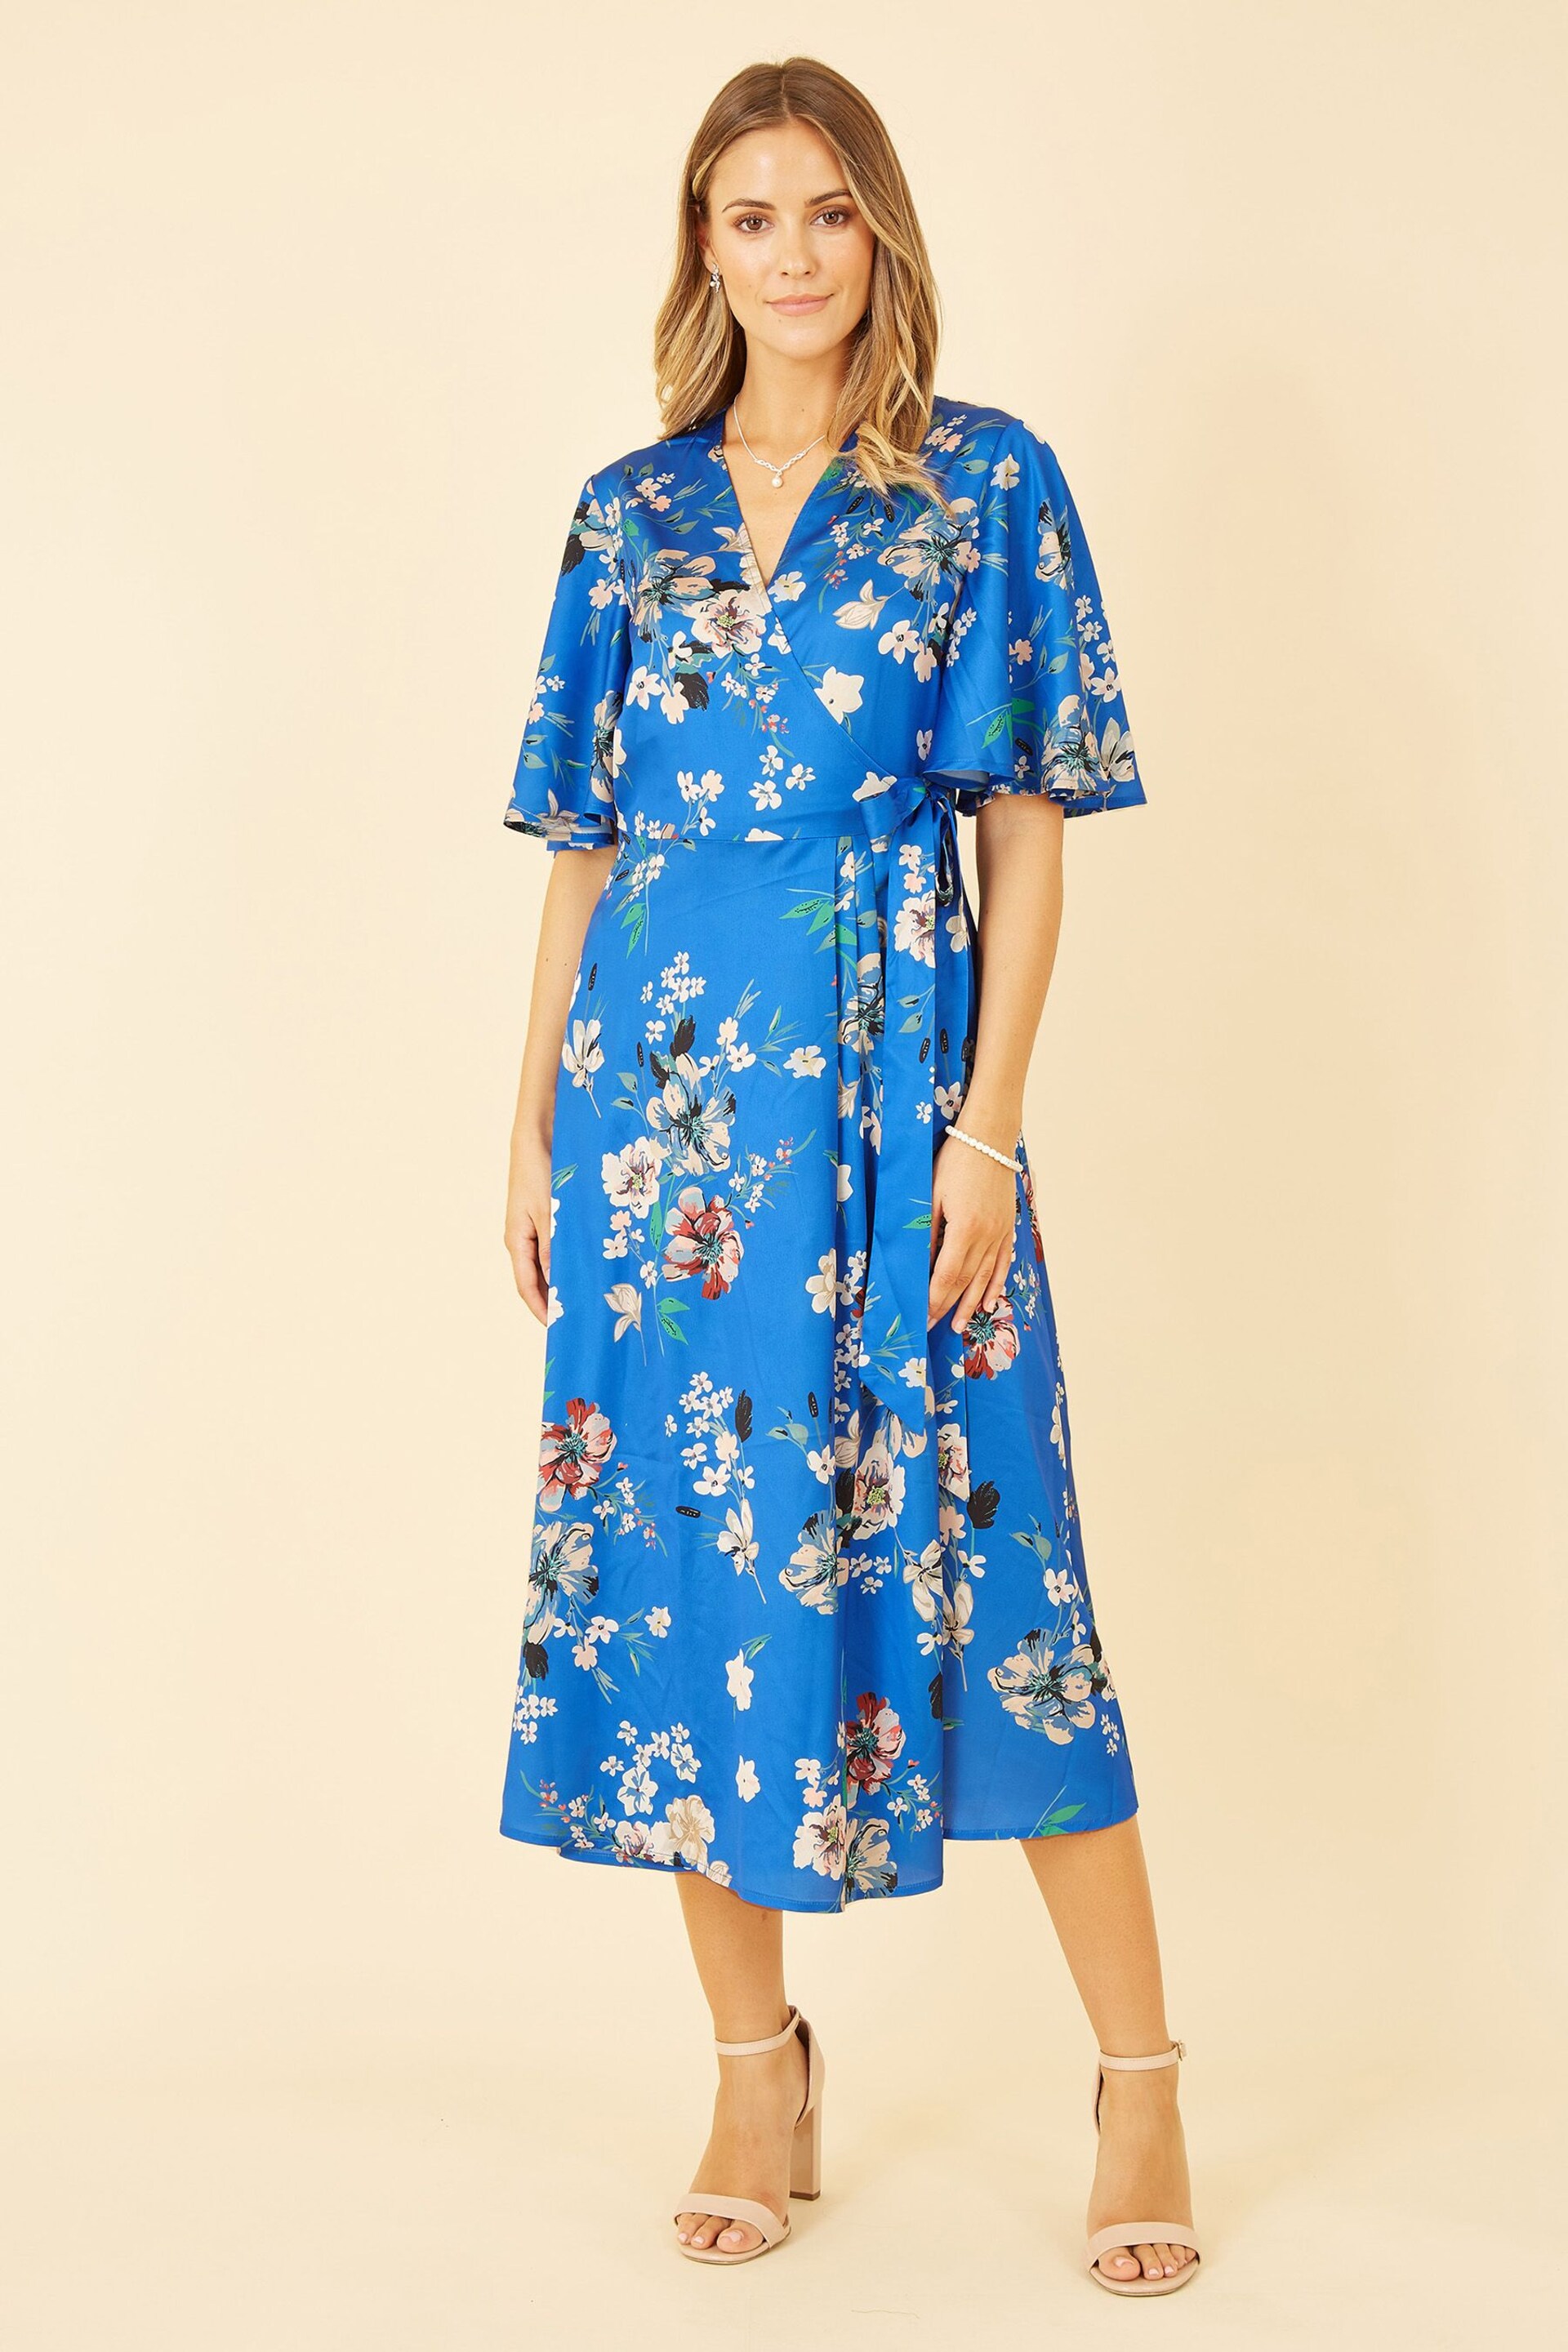 Yumi Blue Floral Satin Wrap Dress - Image 1 of 4